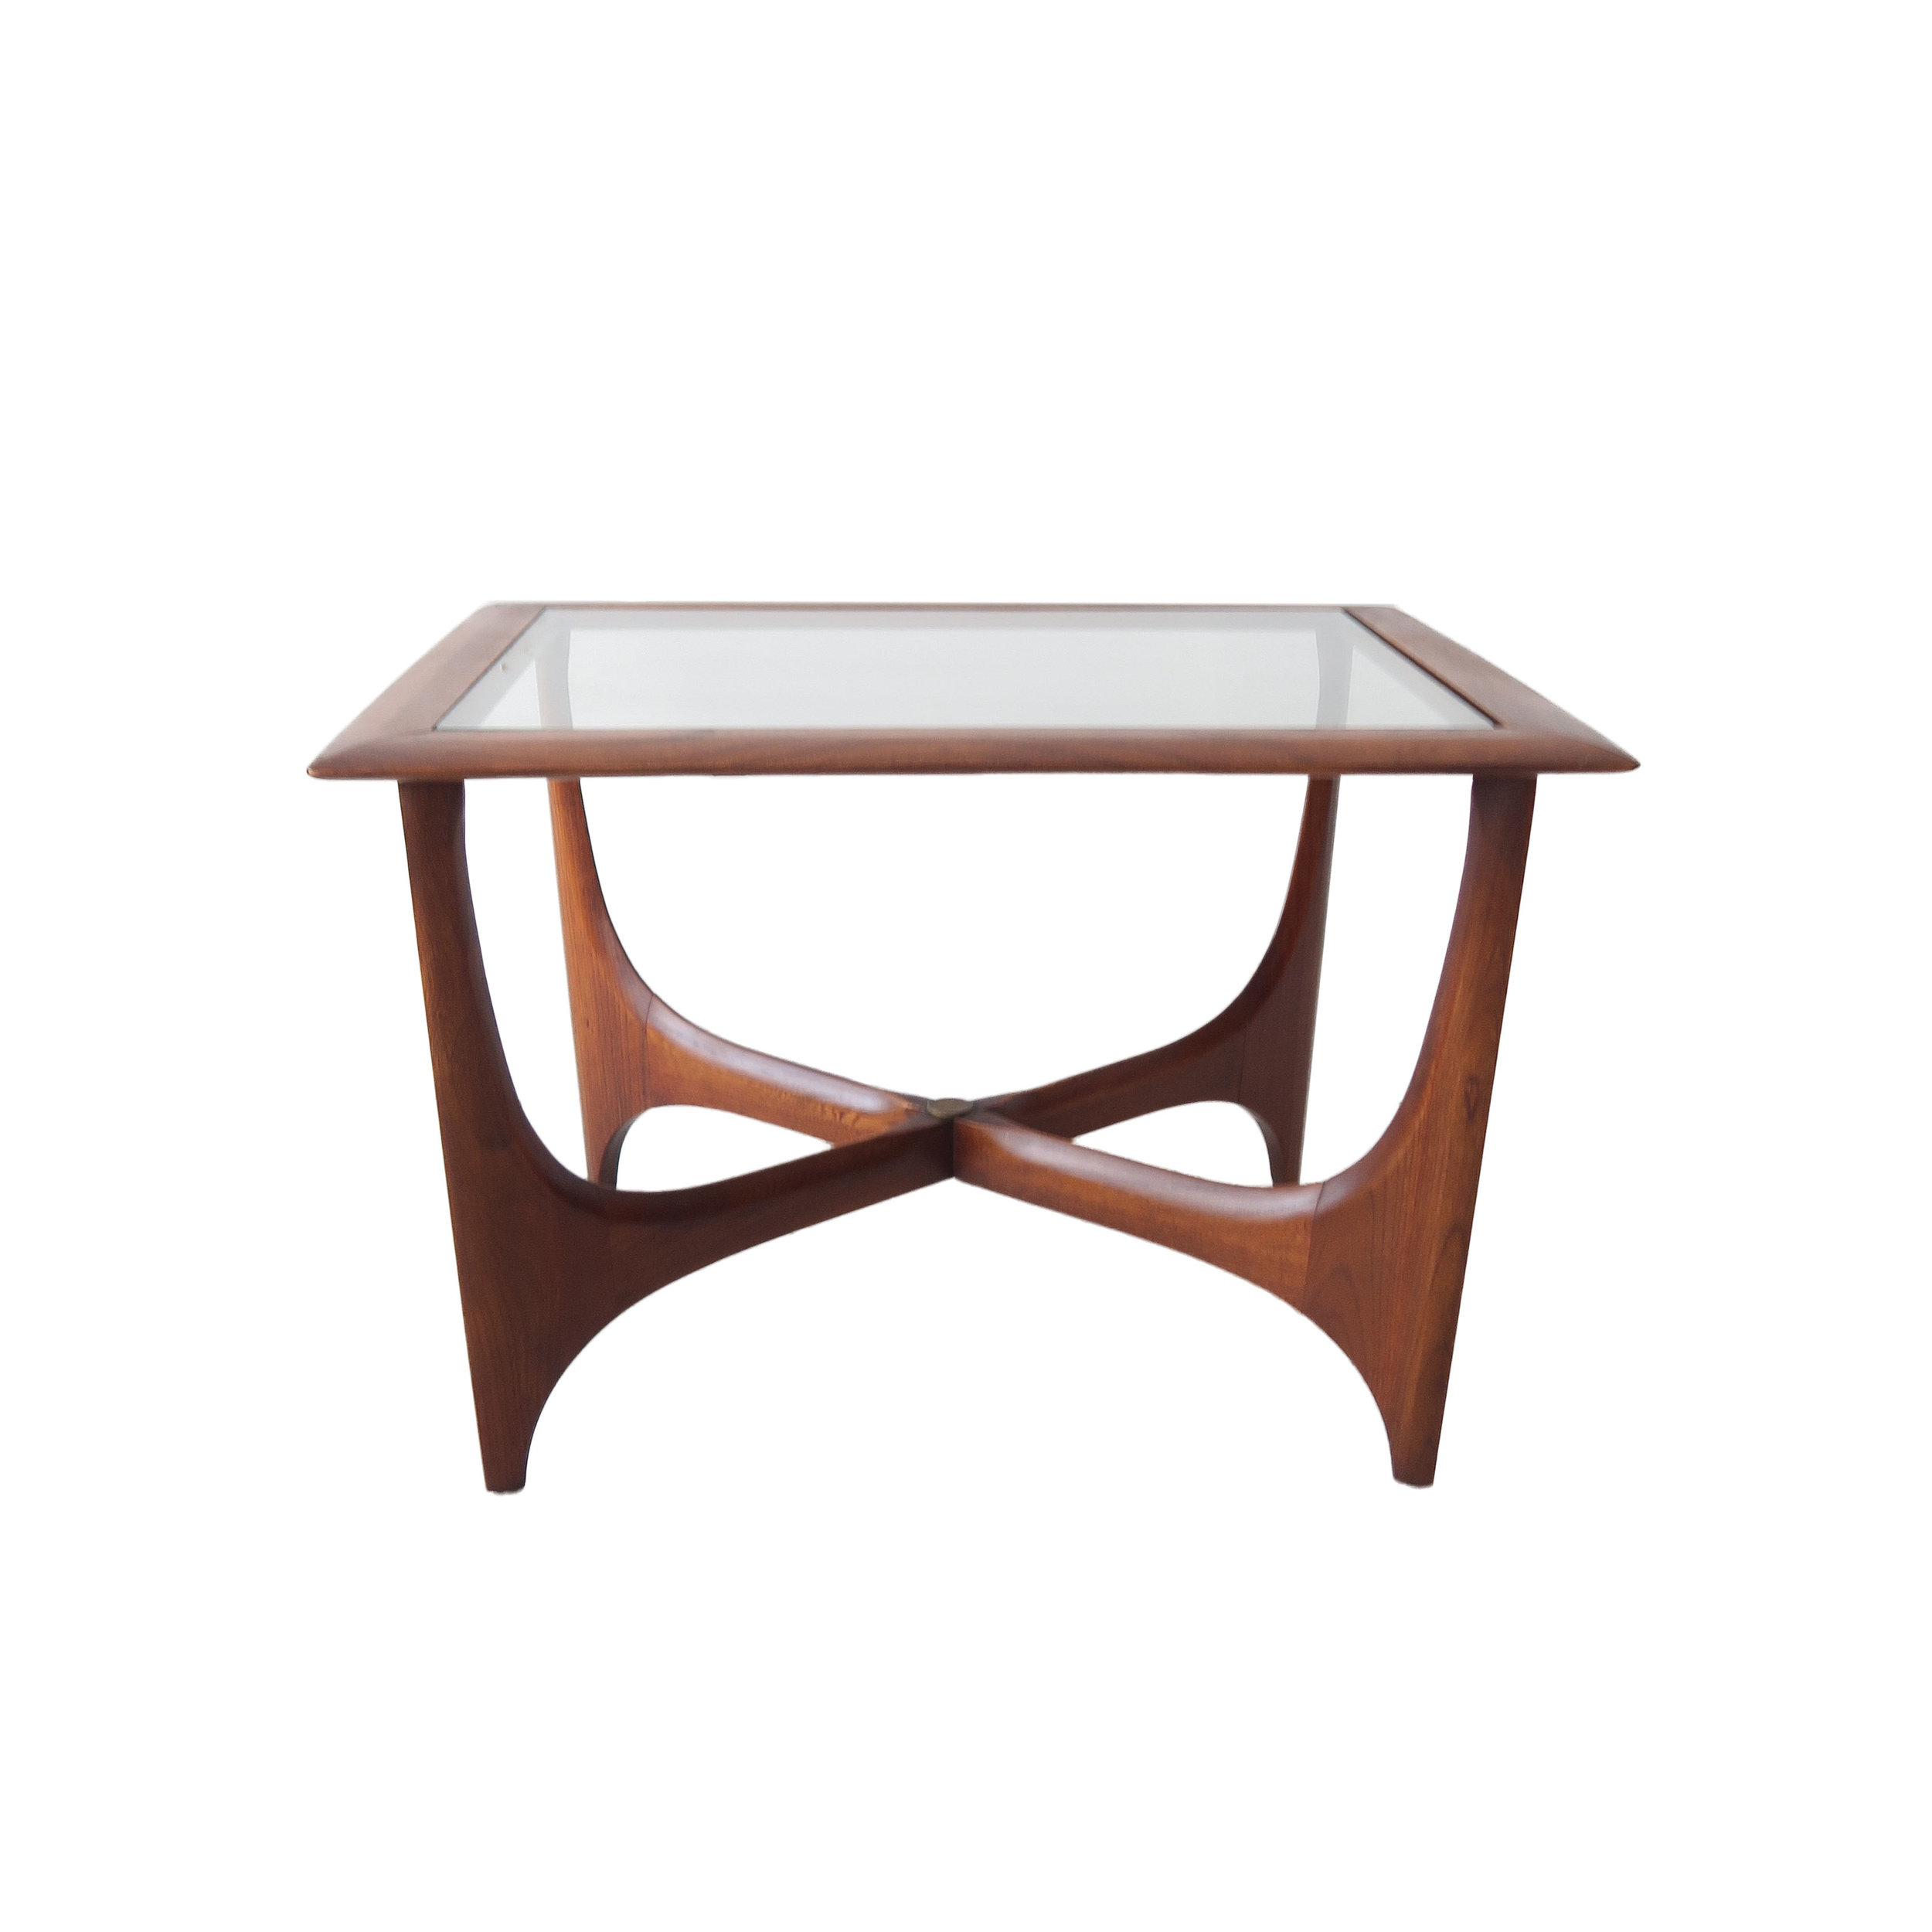 vintage lane wood and glass rectangle table.jpg